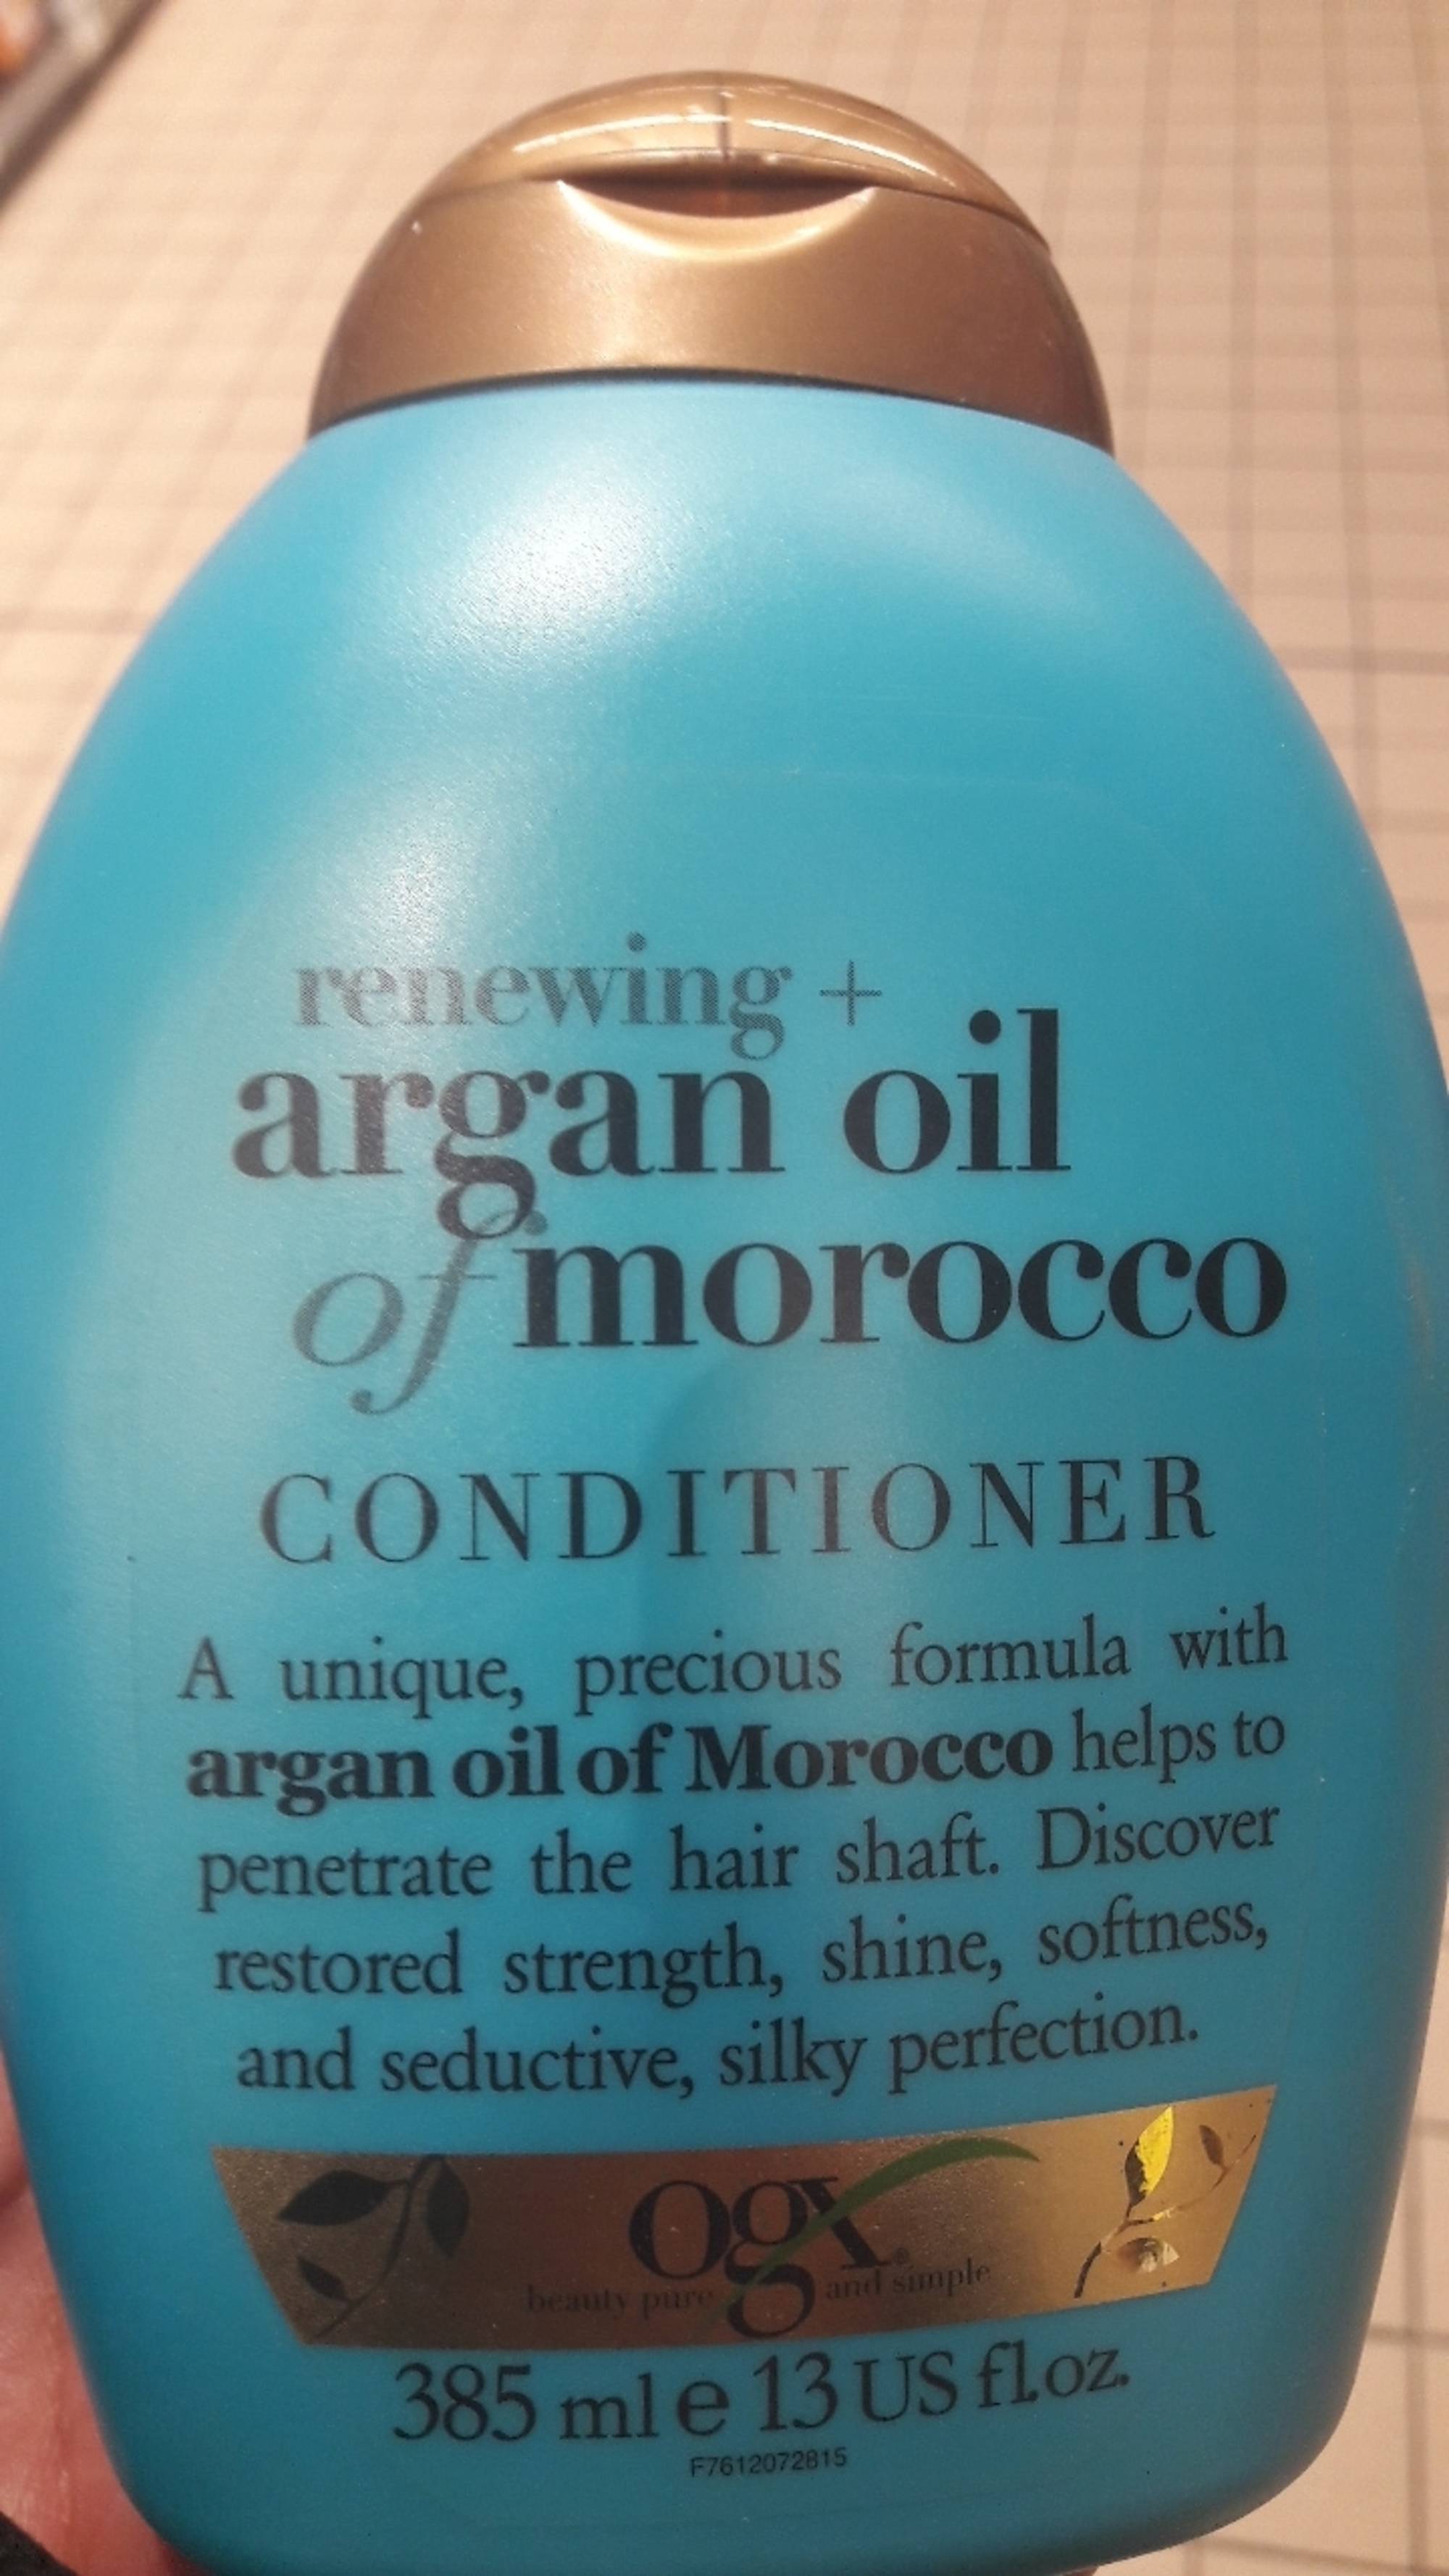 OGX - Renewing+ argan oil of morocco conditioner